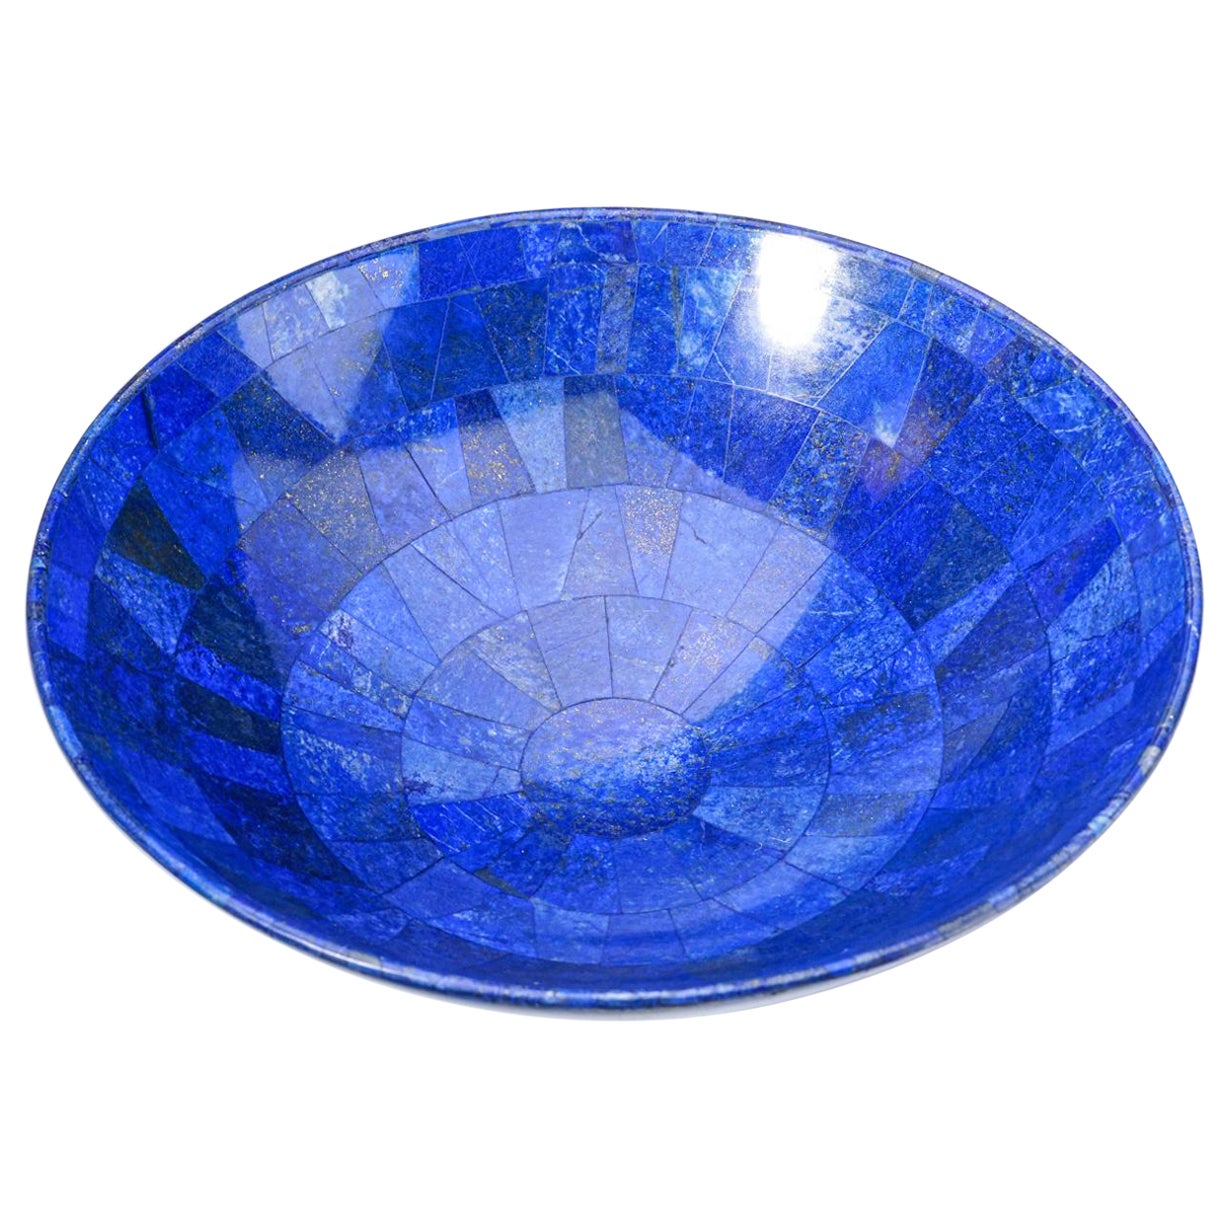 Genuine Polished Lapis Lazuli Bowl (3.6 lbs) For Sale